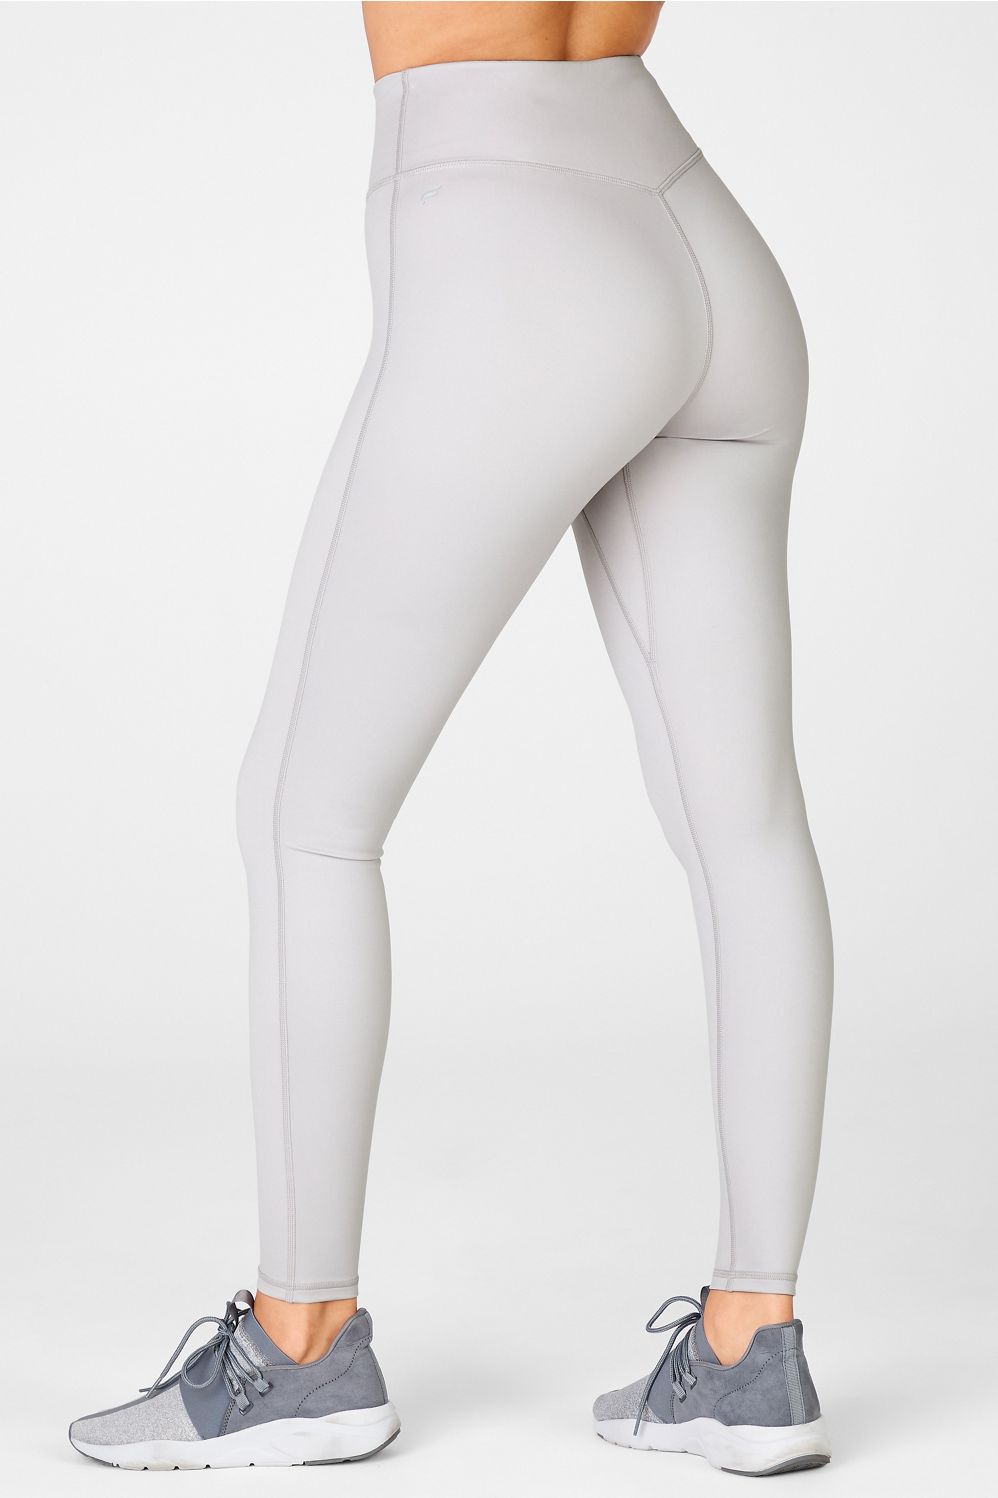 Warm Grey Solid Colour Leggings by FAROS STUDIO